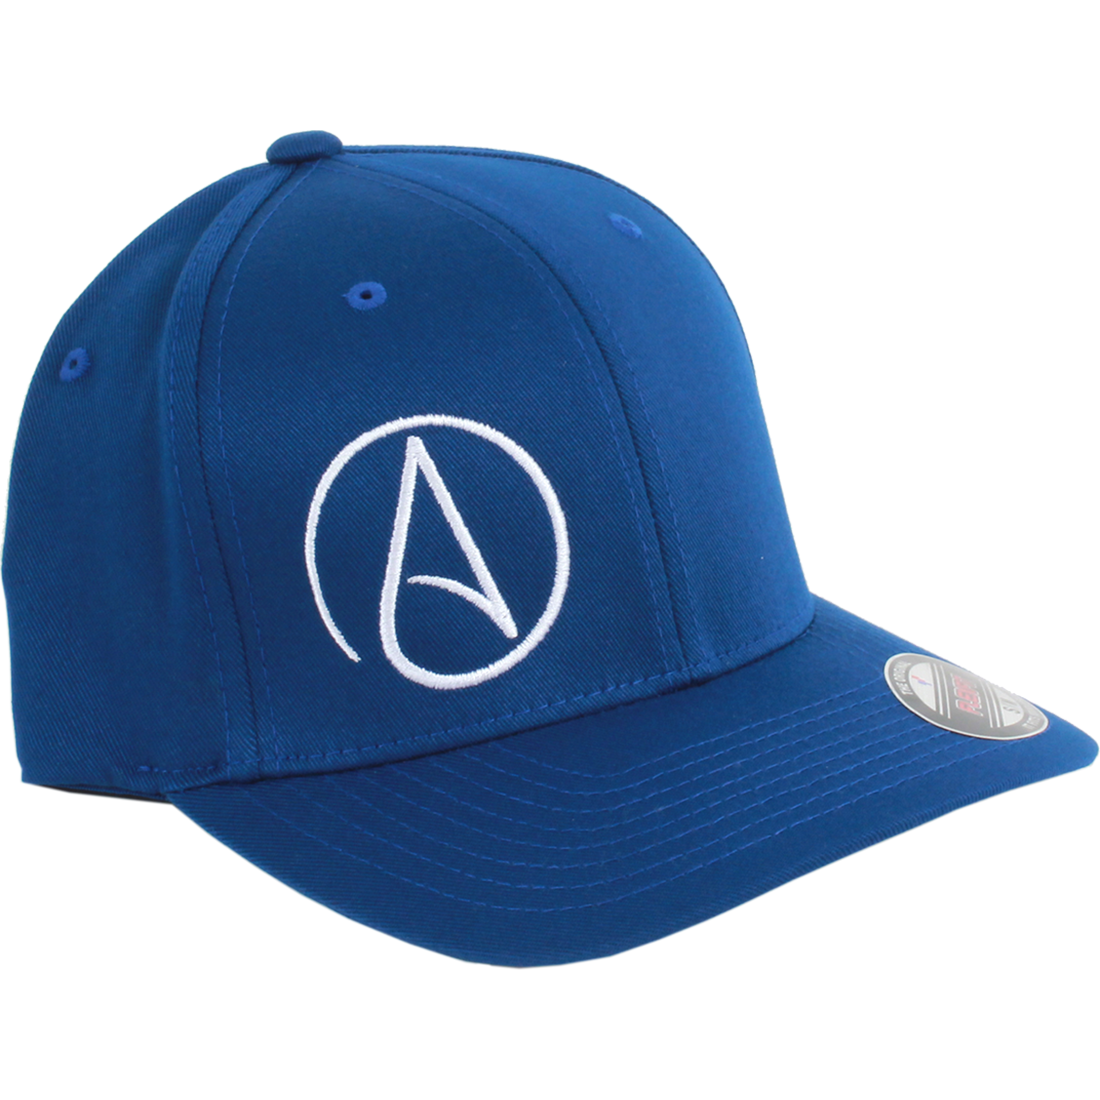 Hat Flexfit California Atheist - Republic Clothes Offset Baseball